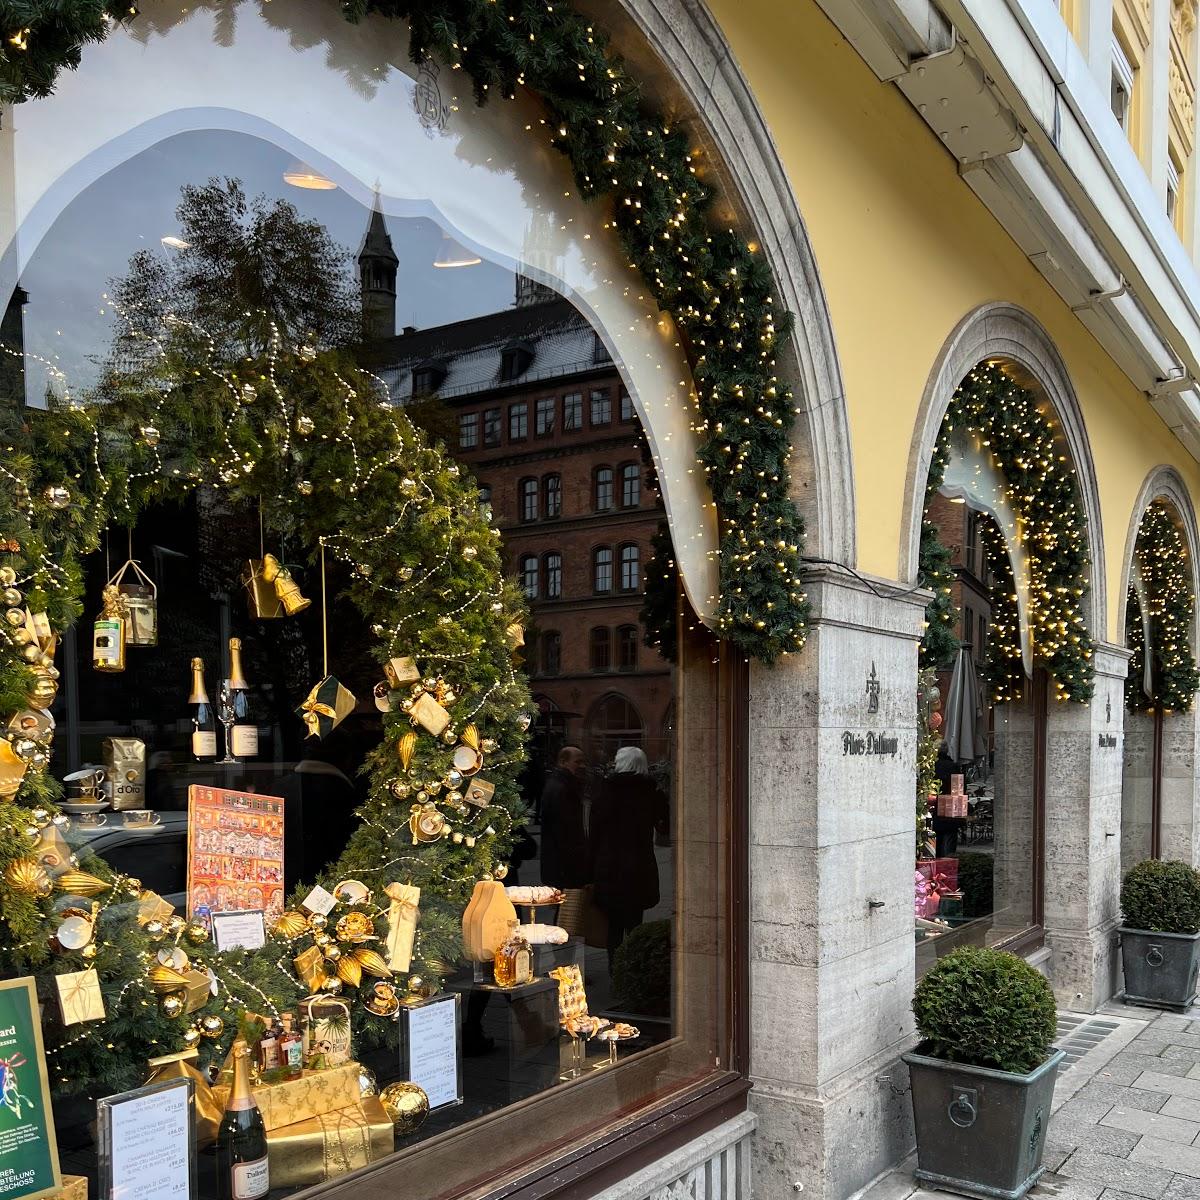 Restaurant "Manufactum Brot & Butter" in München